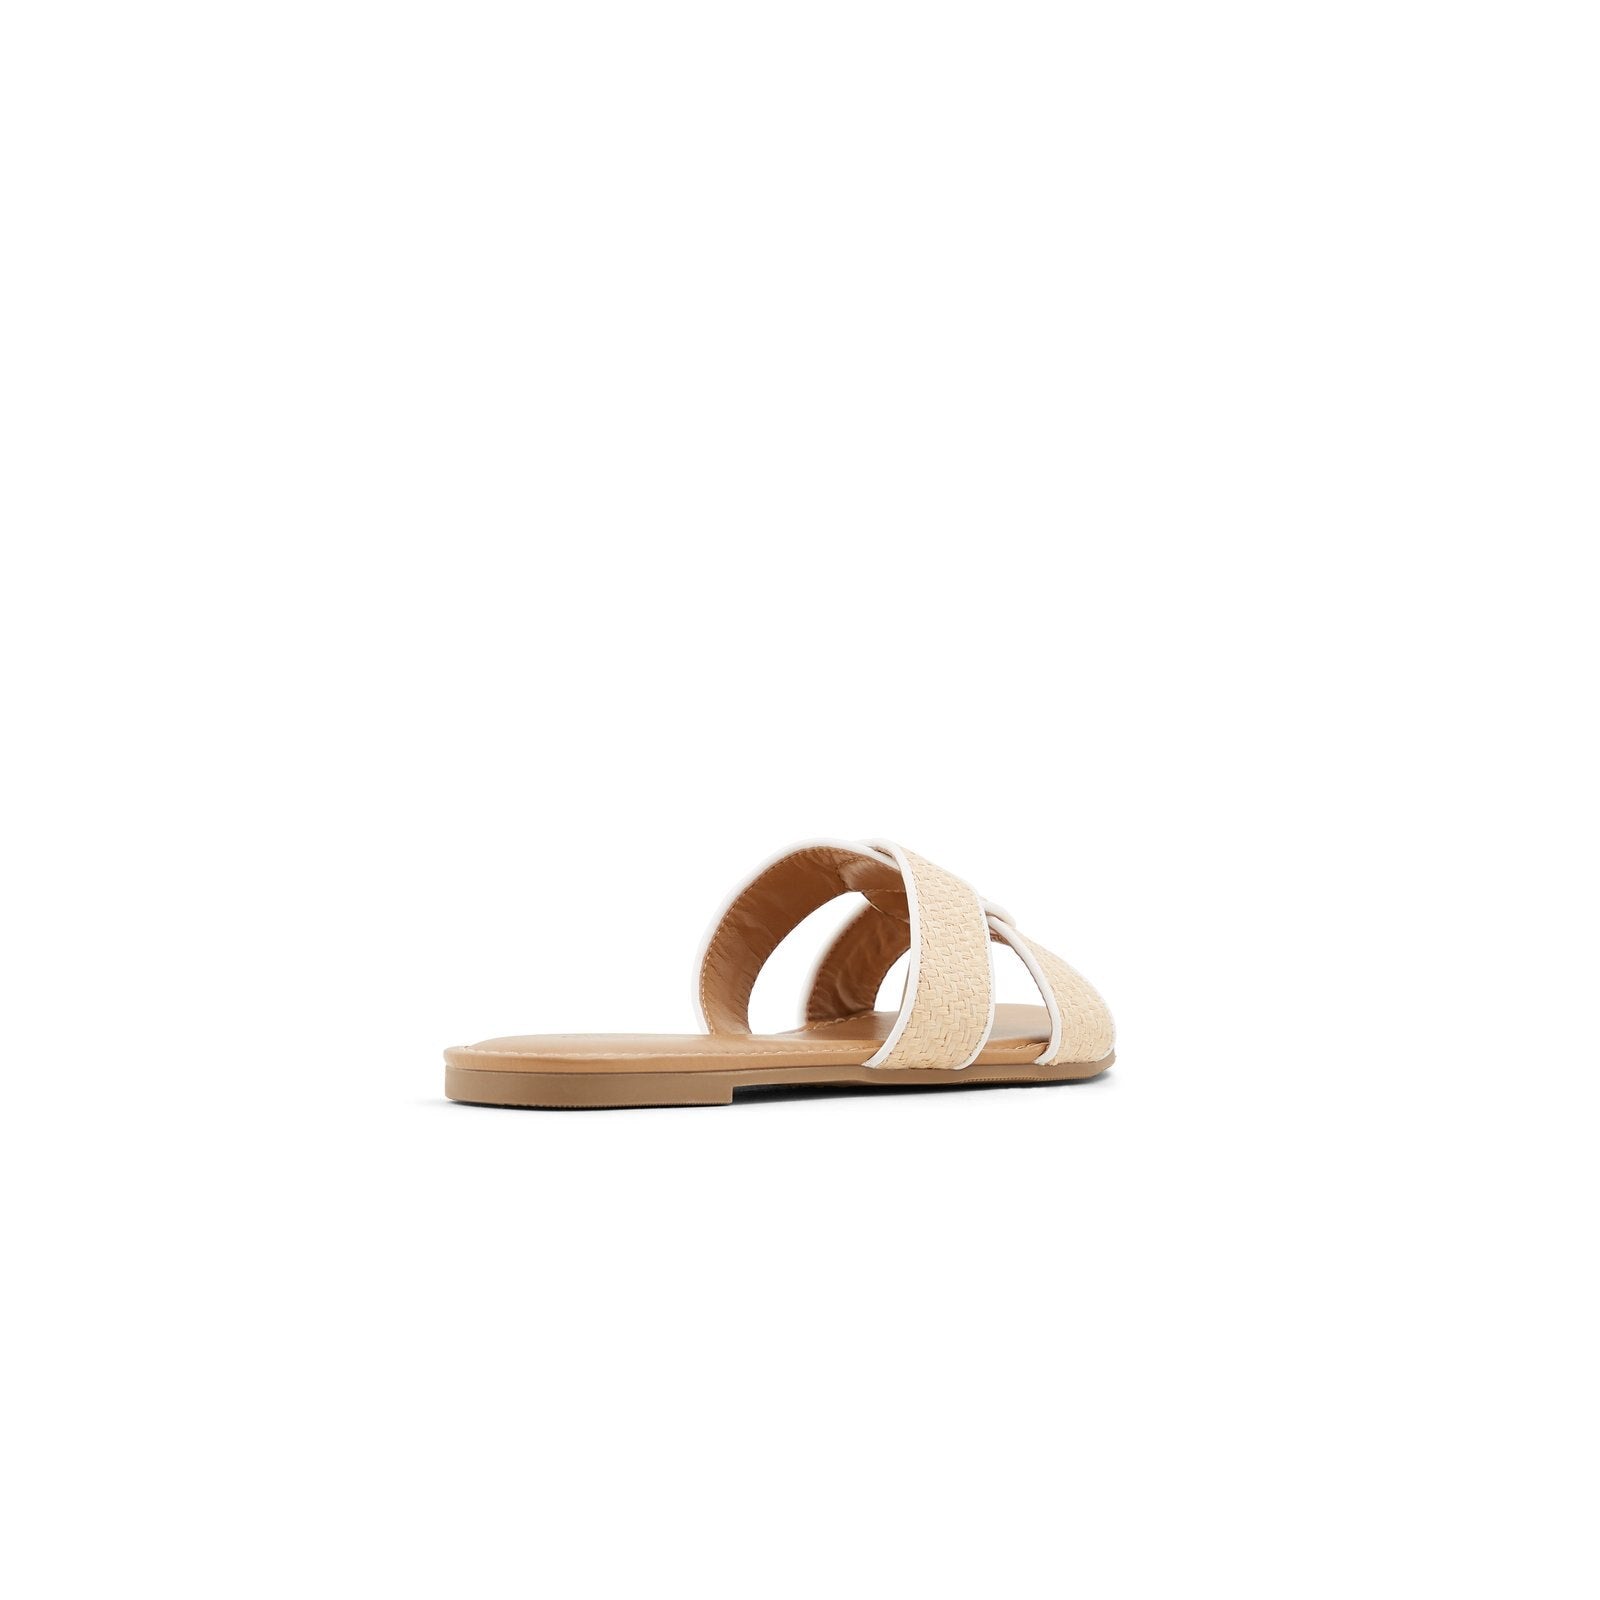 Minyy / Flat Sandals Women Shoes - NATURAL - CALL IT SPRING KSA